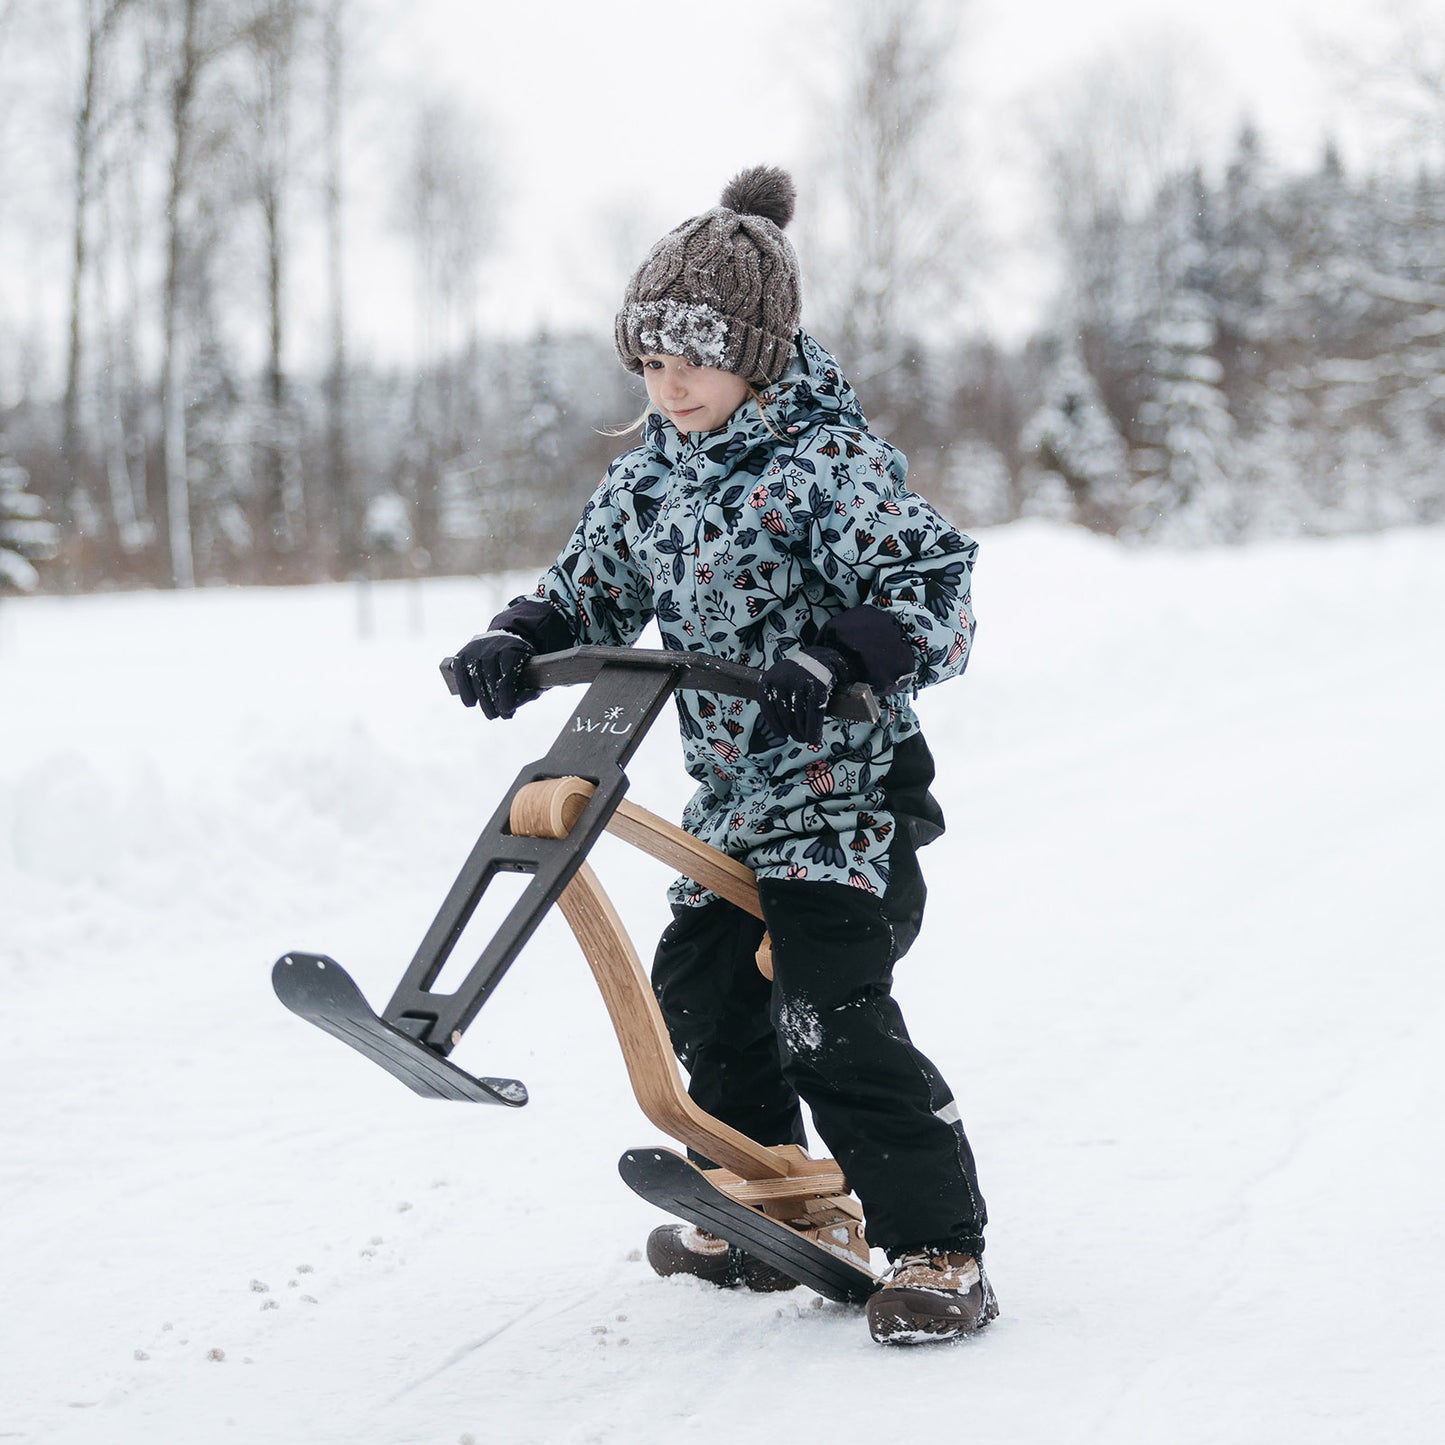 WiU Snow Balance Bike für Kinder: Das perfekte Winterspielzeug